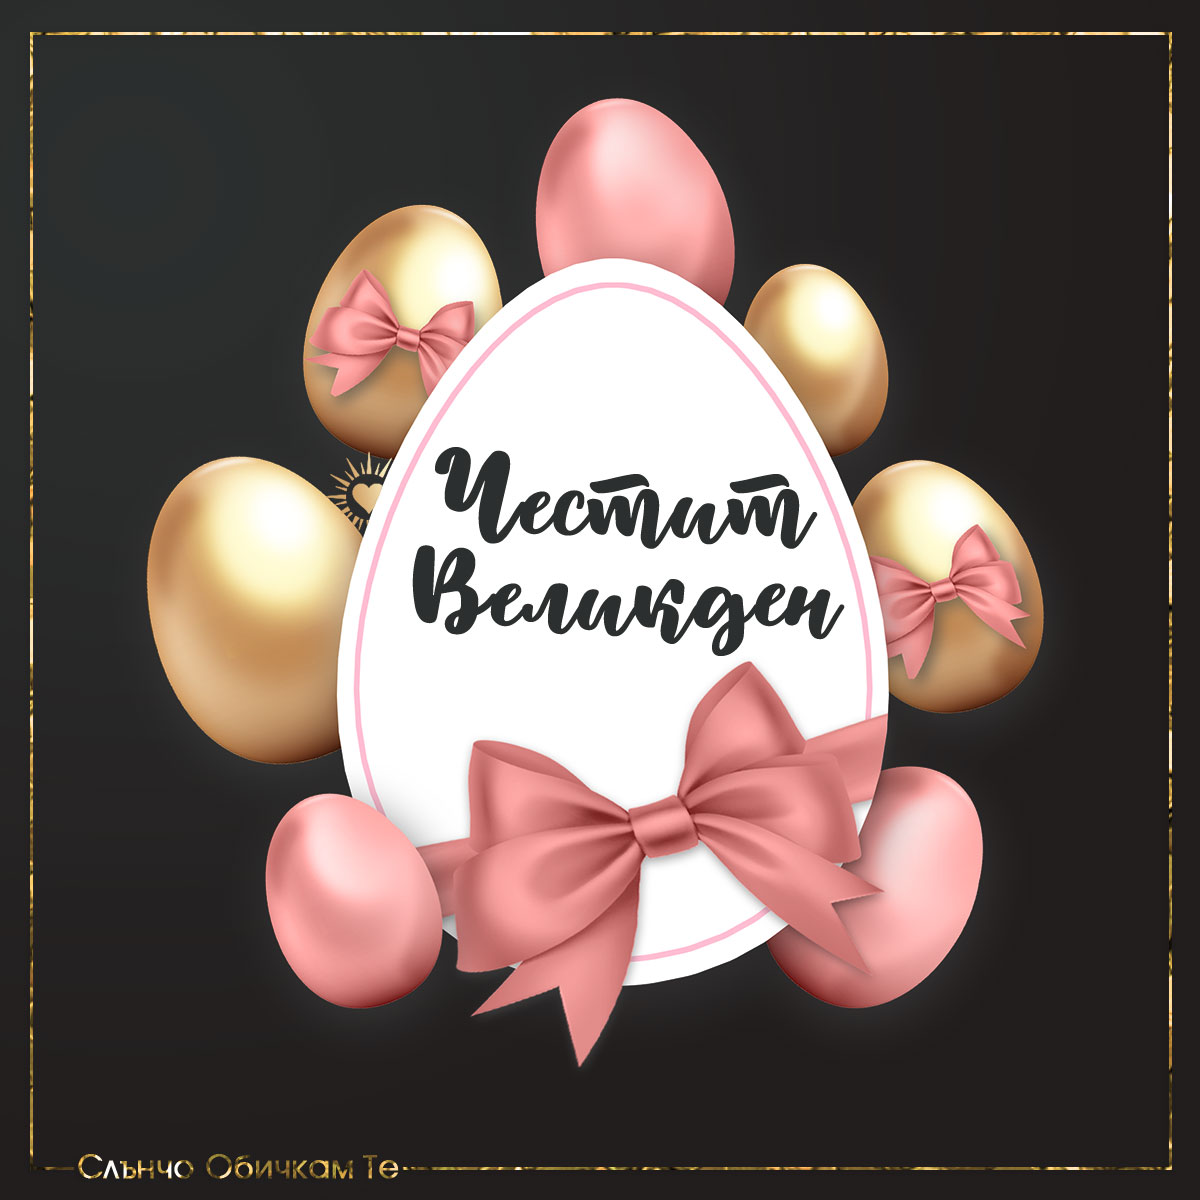 Честит Великден, панделка - Картички за Великден 2021, великденски украси, великденски пожелания, розови яйца, златни яйца, Великденски картички